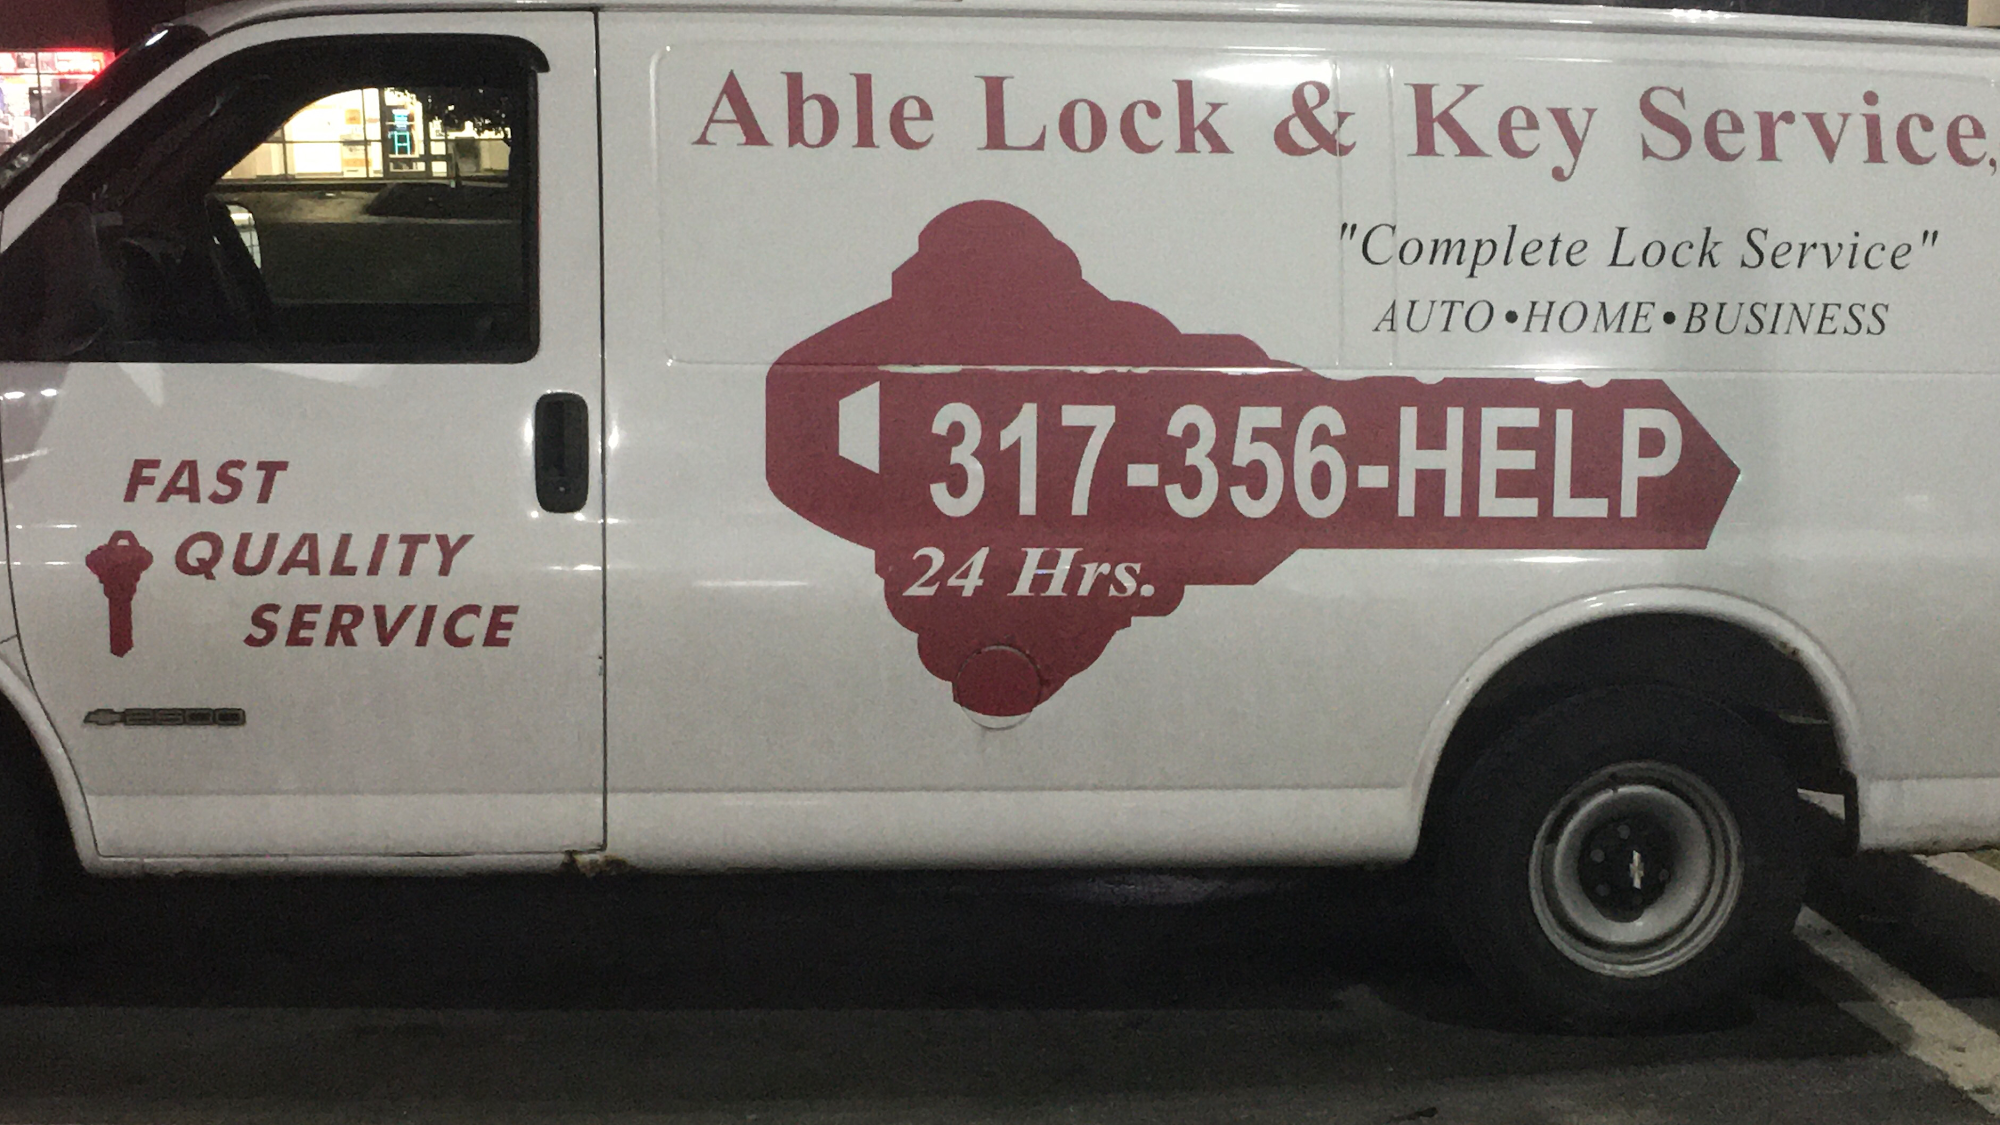 A-Able Lock & Key Service L.L.C.